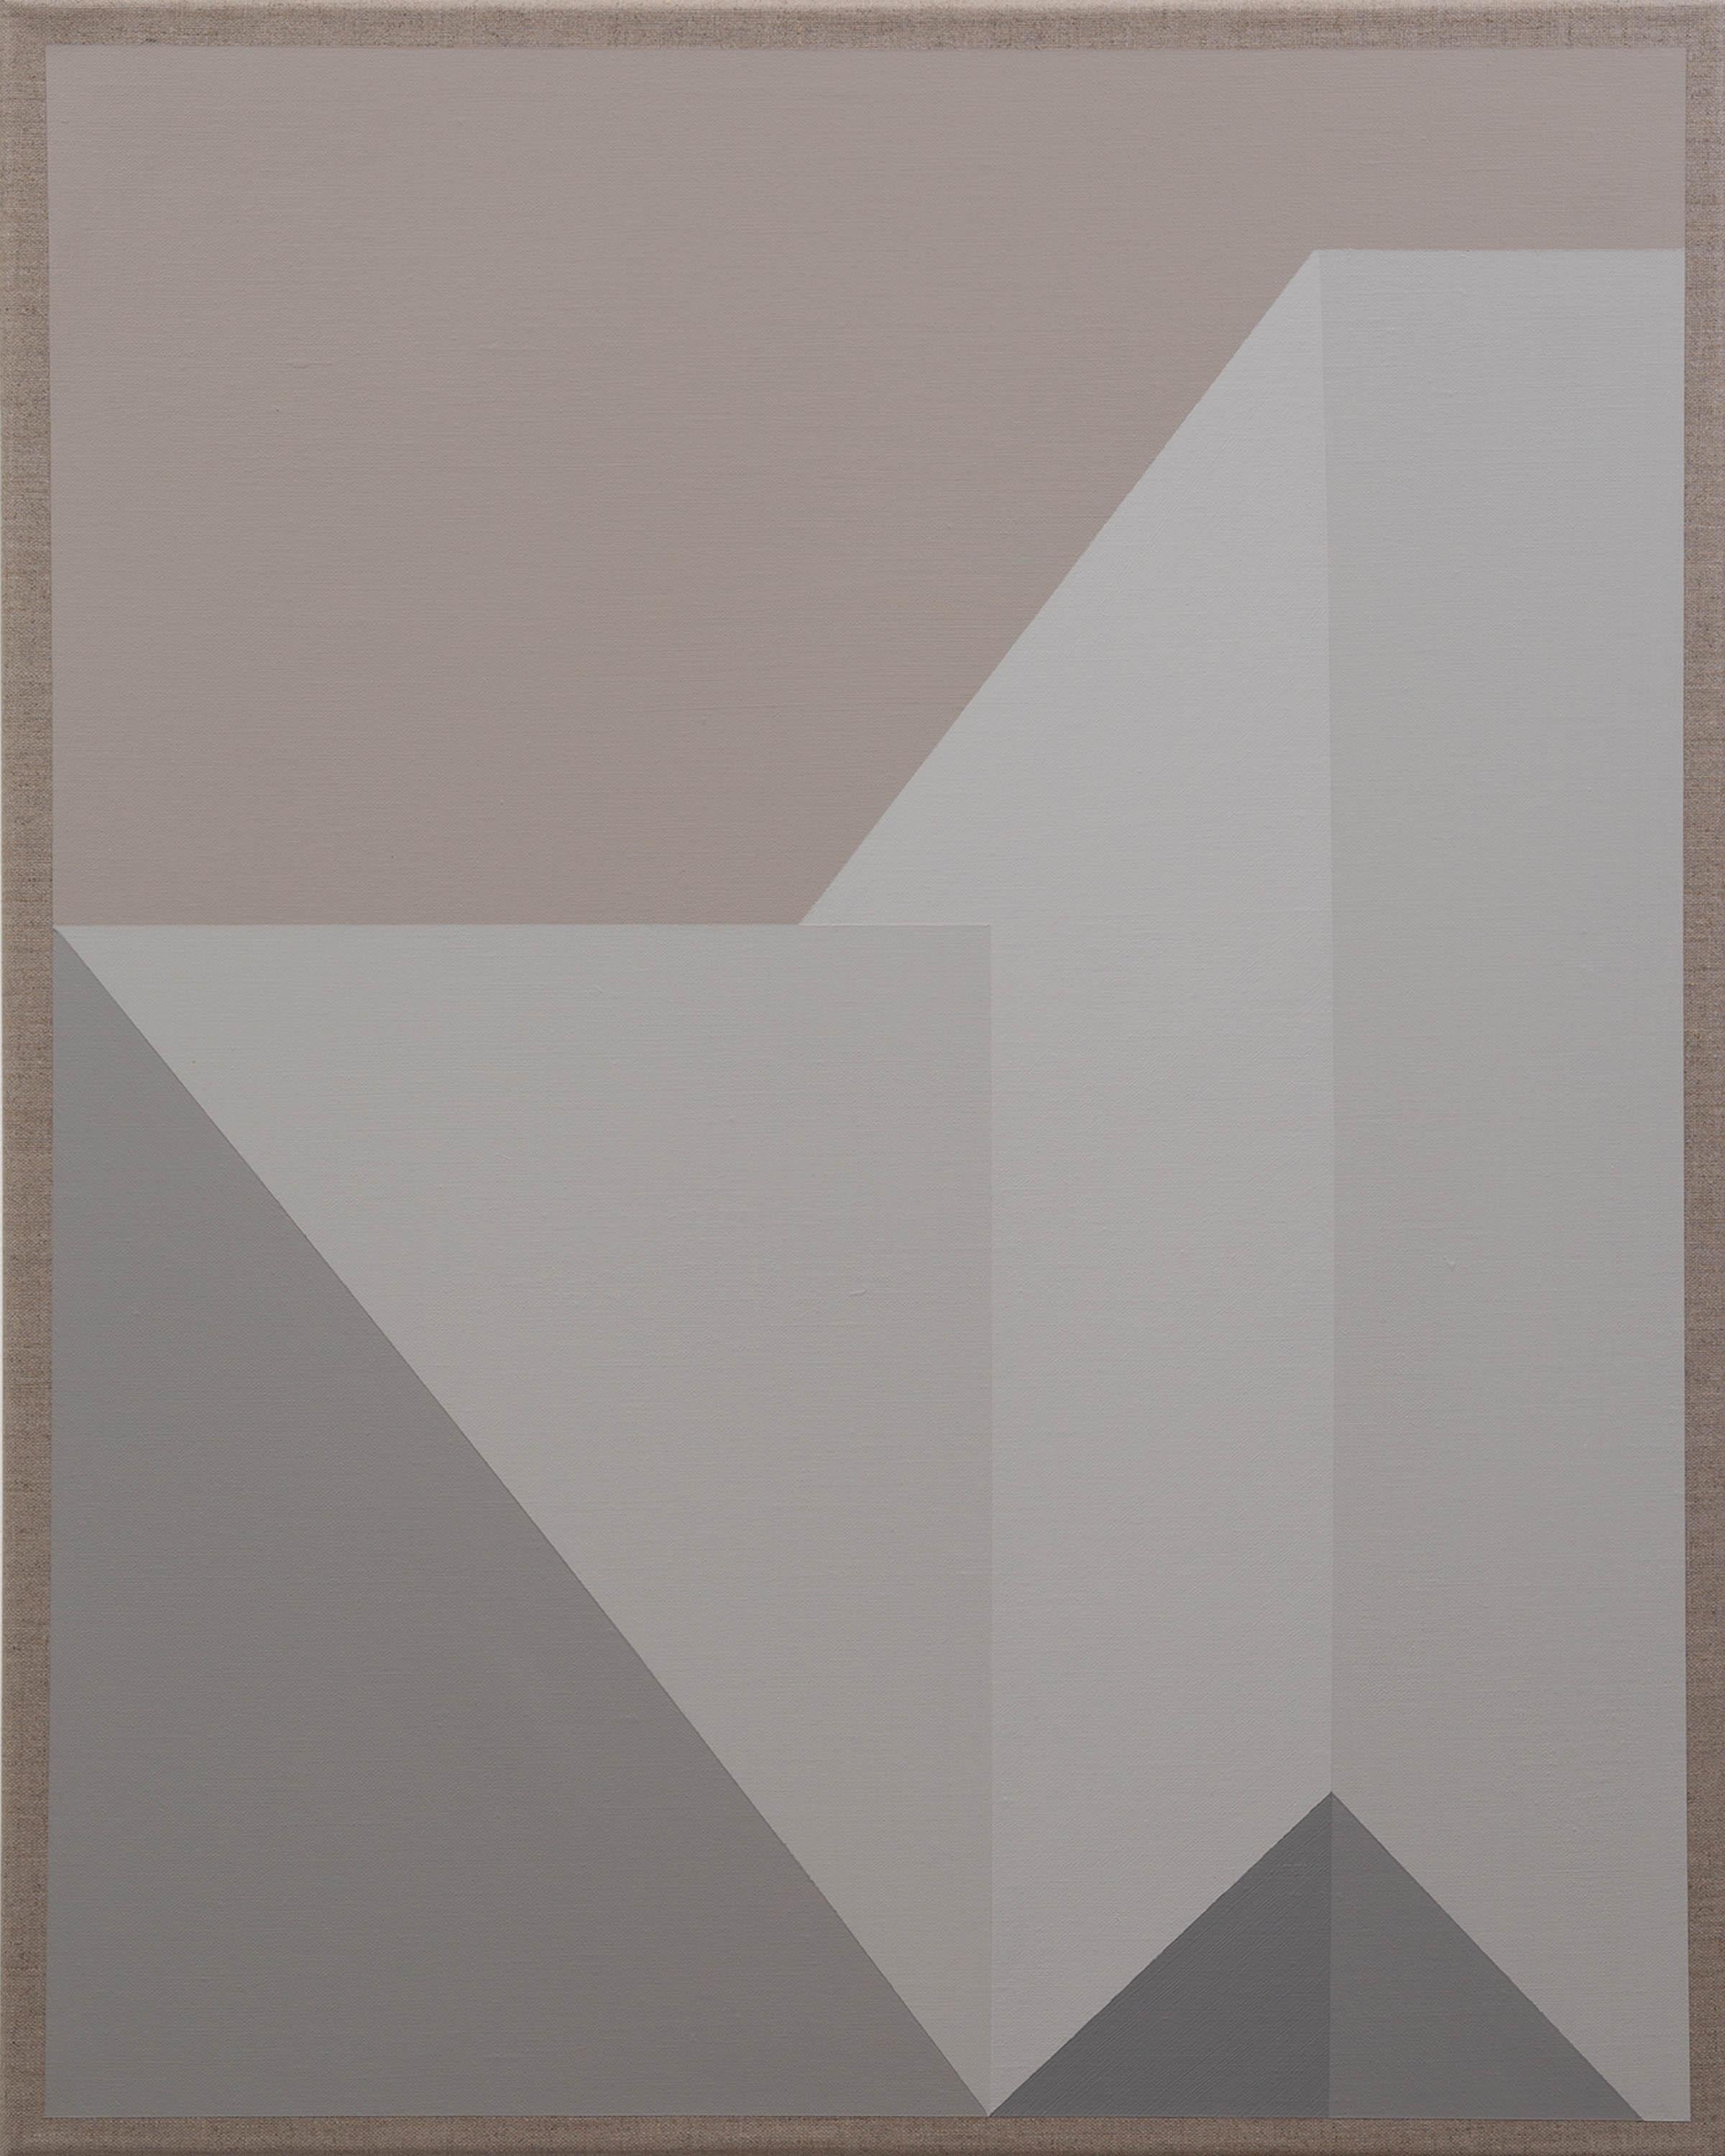 Karli Henneman Abstract Painting - K.75